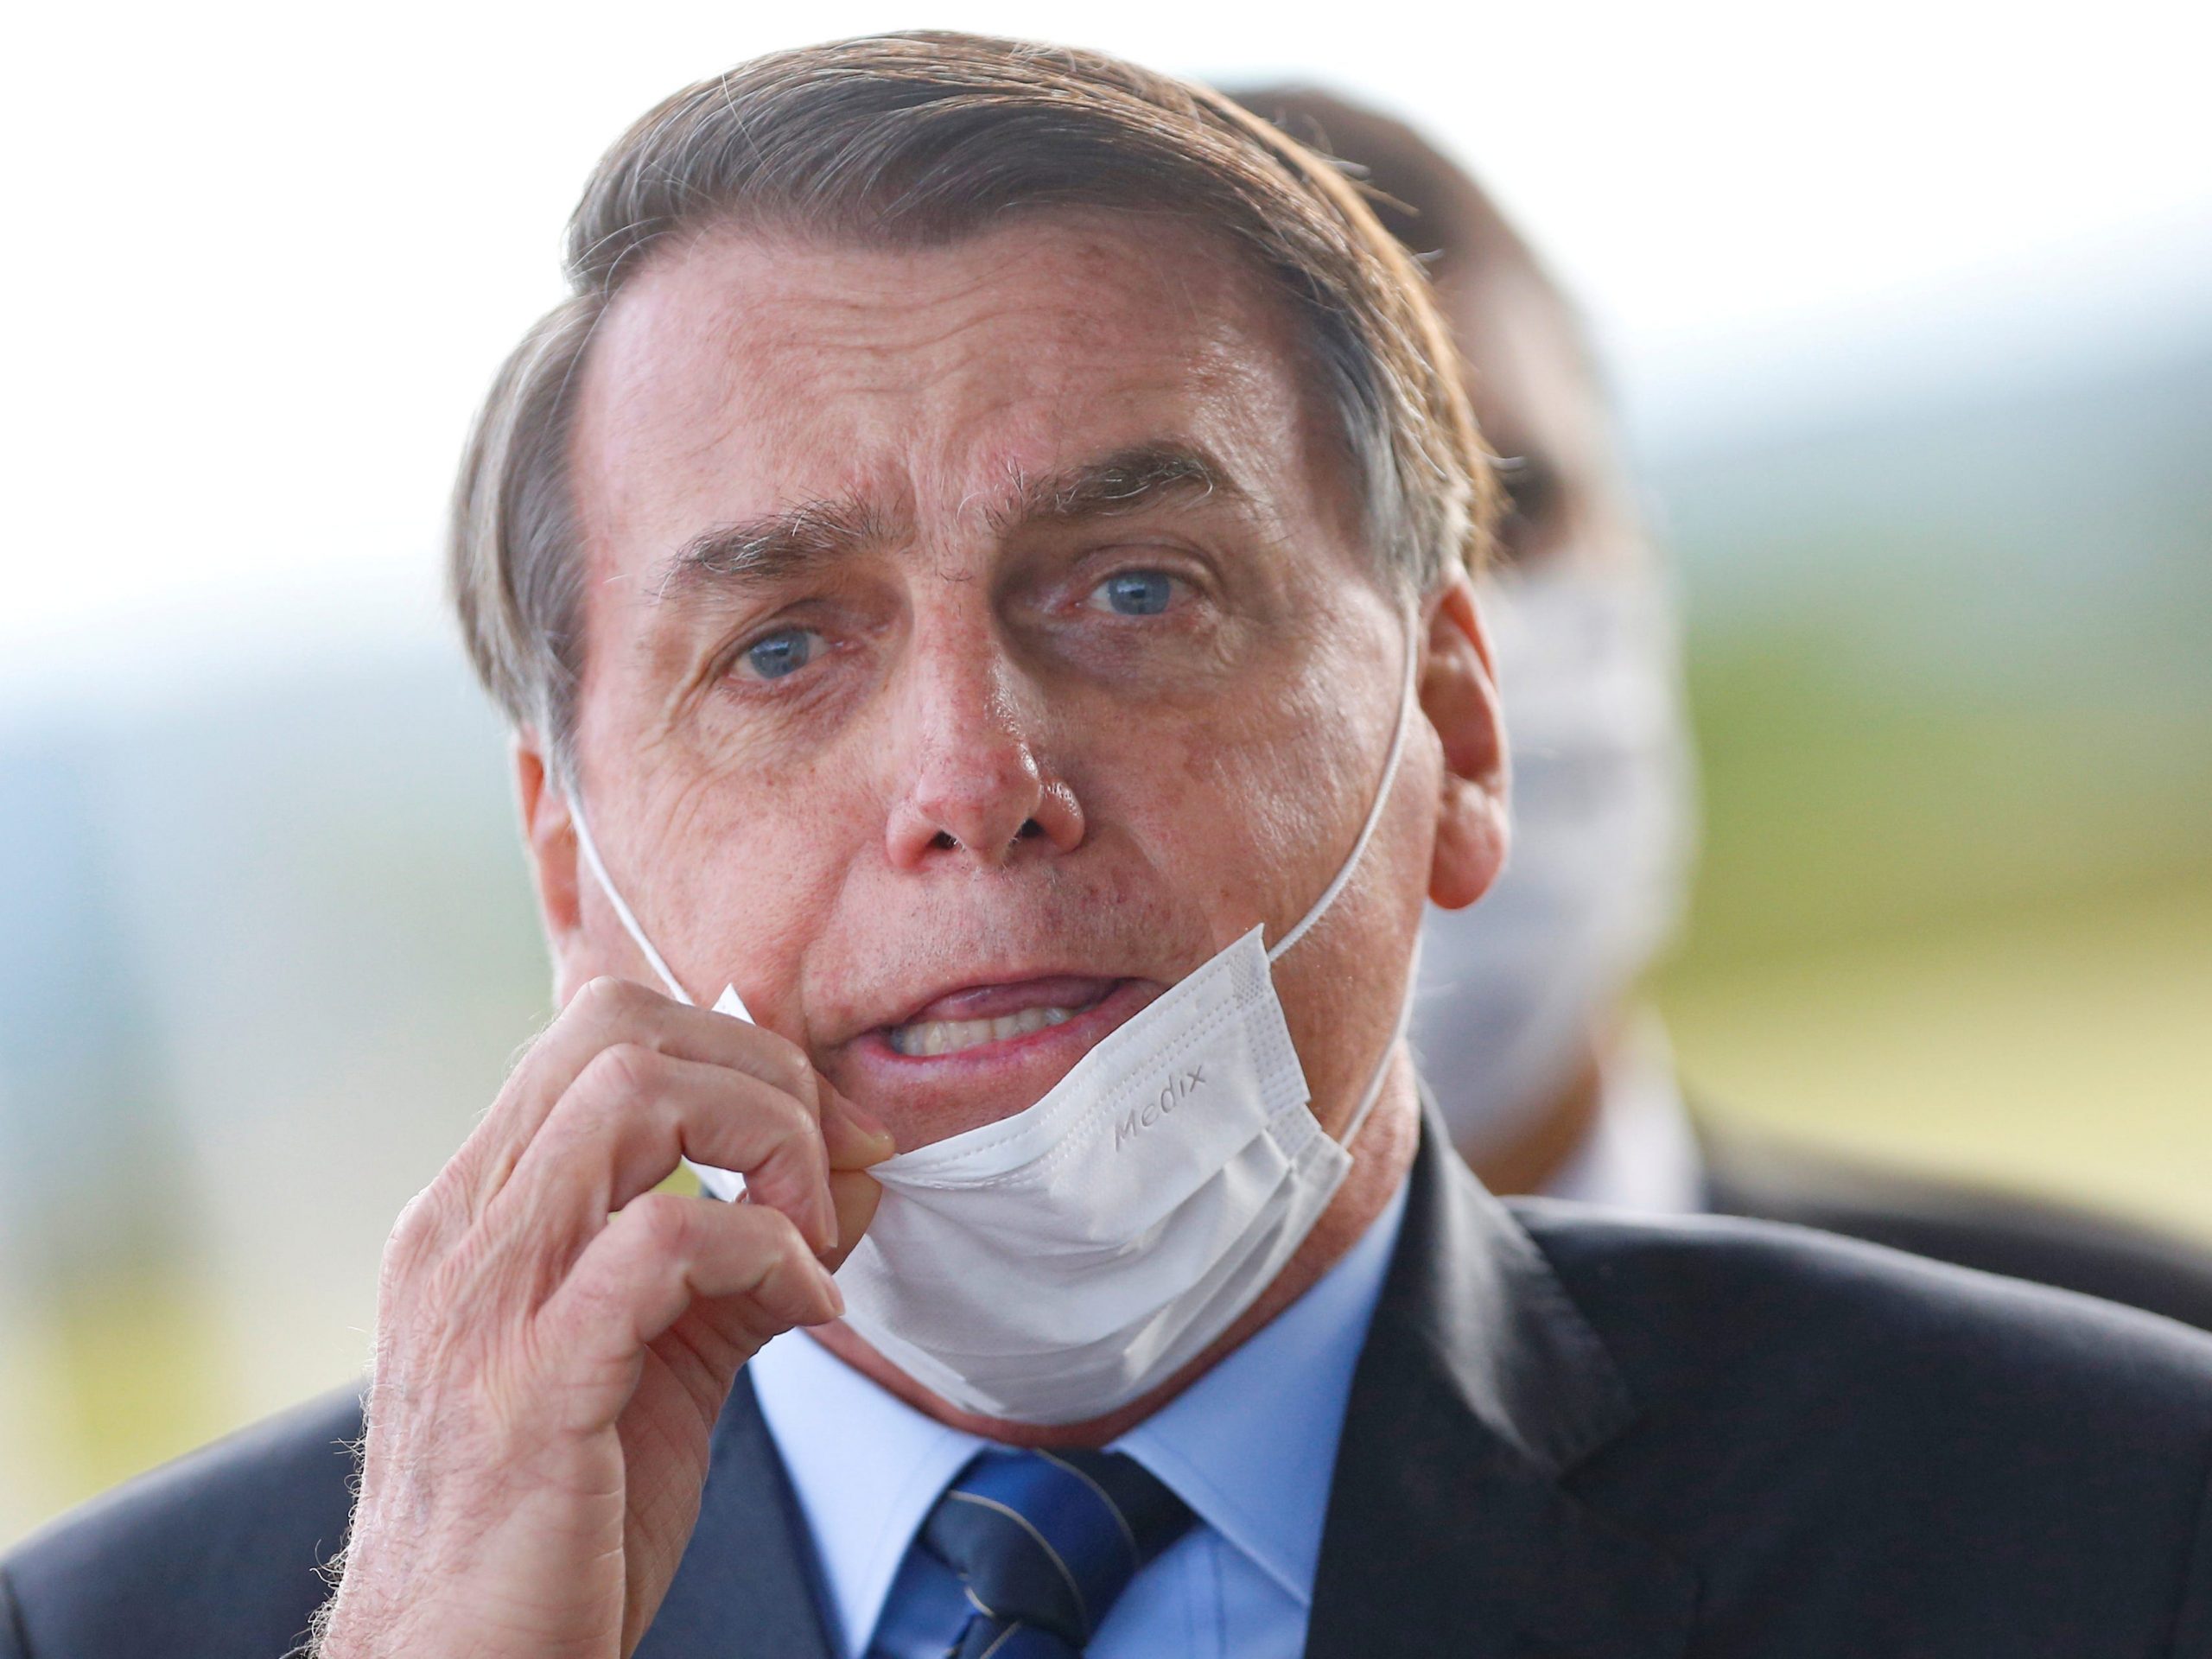 FILE PHOTO: Brazil's President Jair Bolsonaro adjusts his mask as he leaves Alvorada Palace, amid the coronavirus disease (COVID-19) outbreak in Brasilia, Brazil May 13, 2020. REUTERS/Adriano Machado     